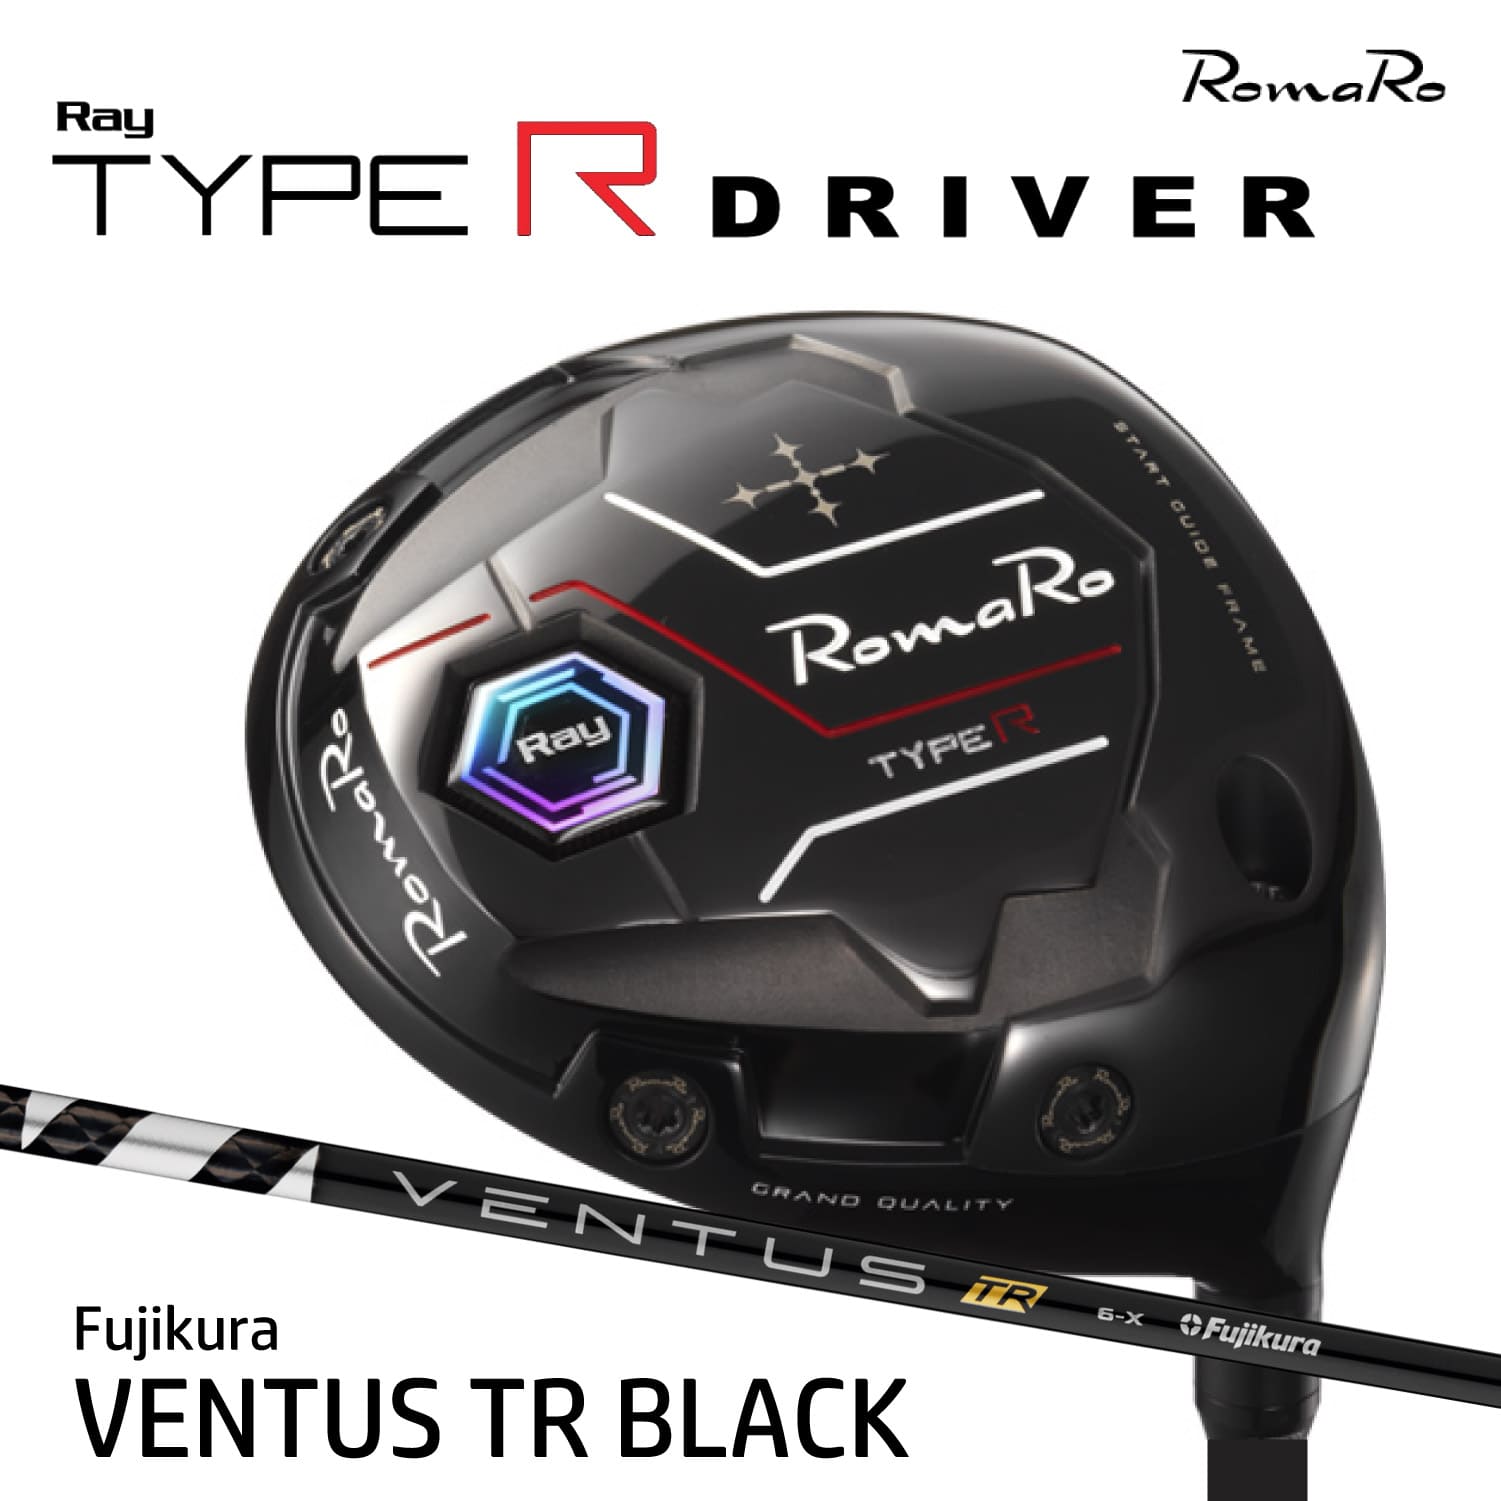 RomaRo Ray TYPE R Driver VENTUS TR BLACK ロマロ レイ タイプアール ドライバー カーボンシャフト ゴルフクラブ